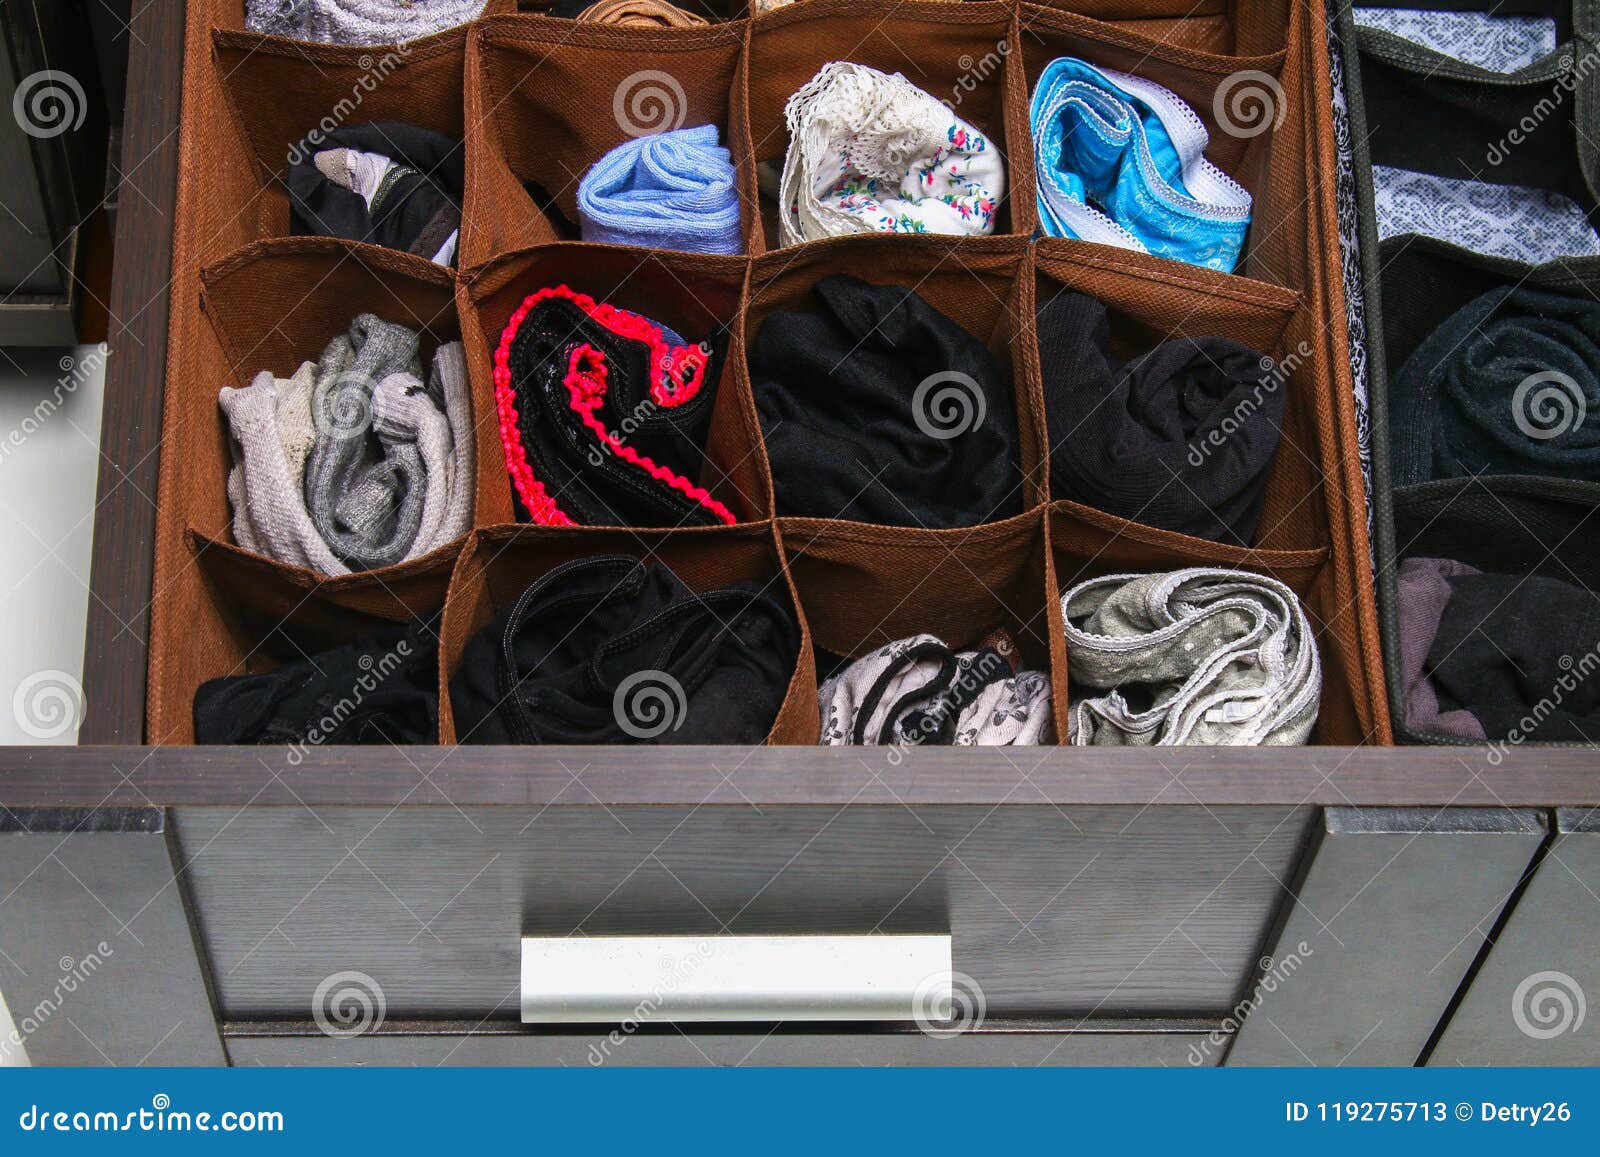 https://thumbs.dreamstime.com/z/organization-storage-socks-panties-drawer-chest-drawers-cabinet-organization-storage-socks-119275713.jpg